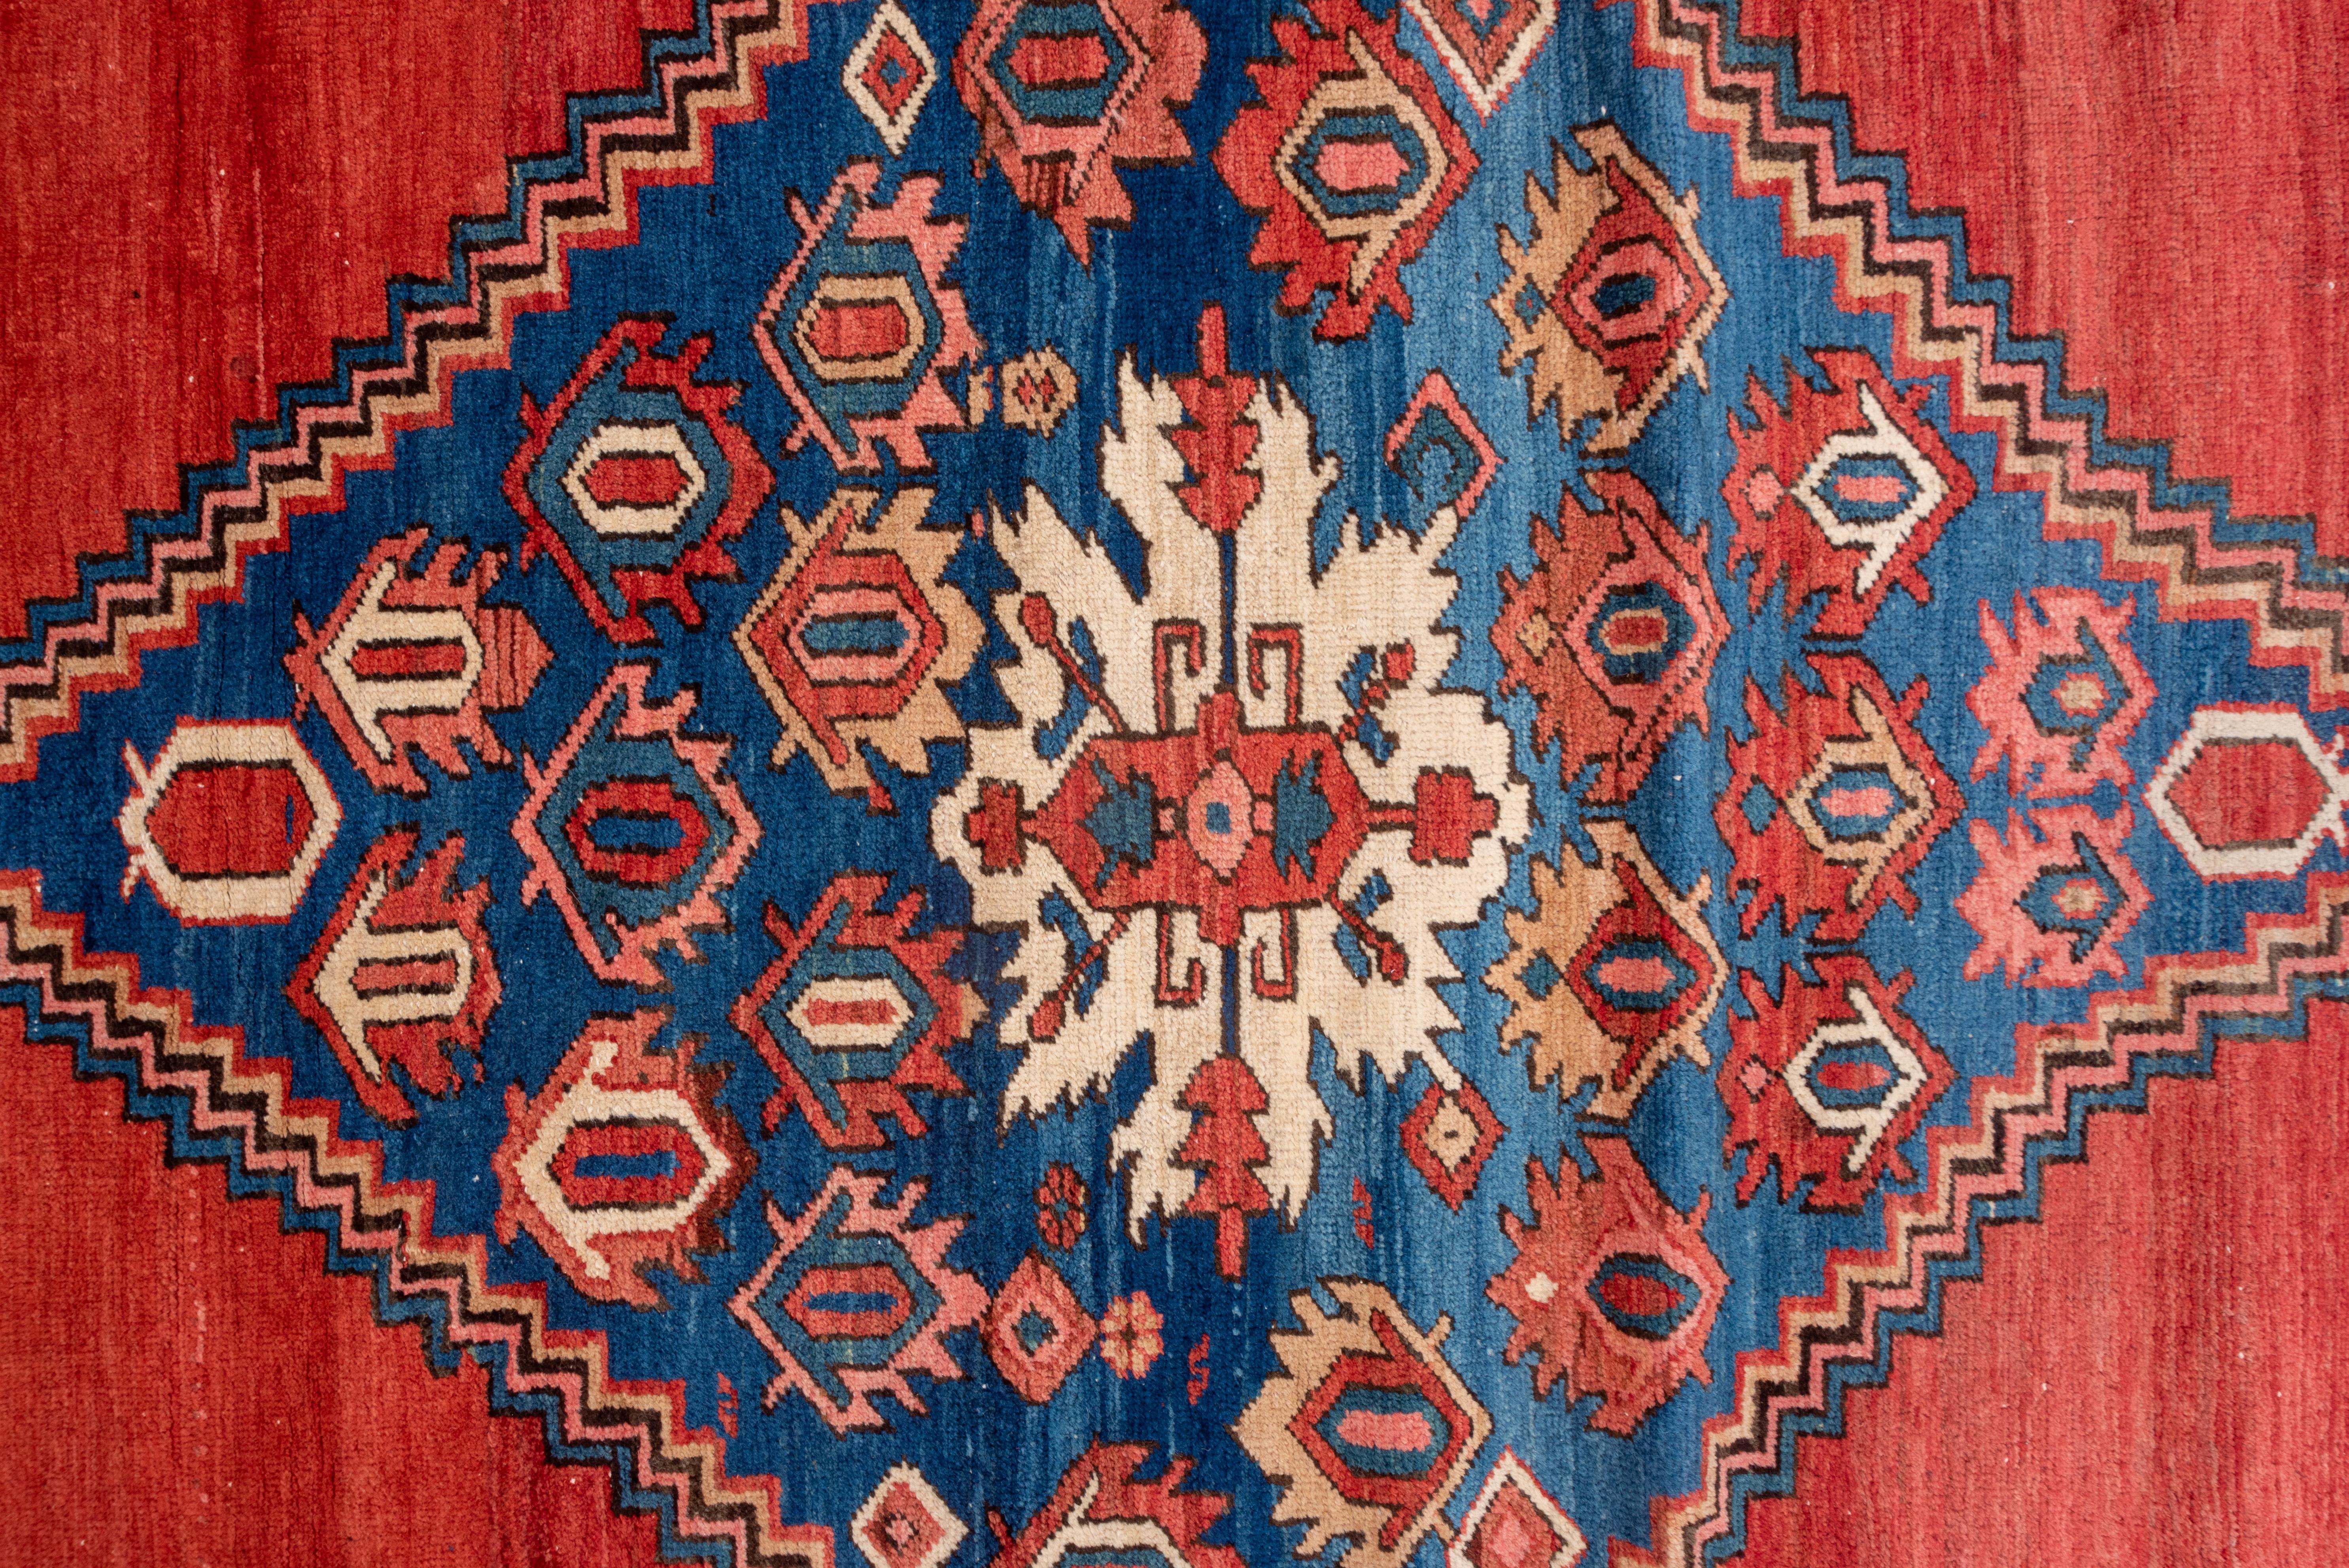 Hand-Knotted Rare Fine Antique Persian Serapi Mansion Carpet, Bright Colors, Blue Border